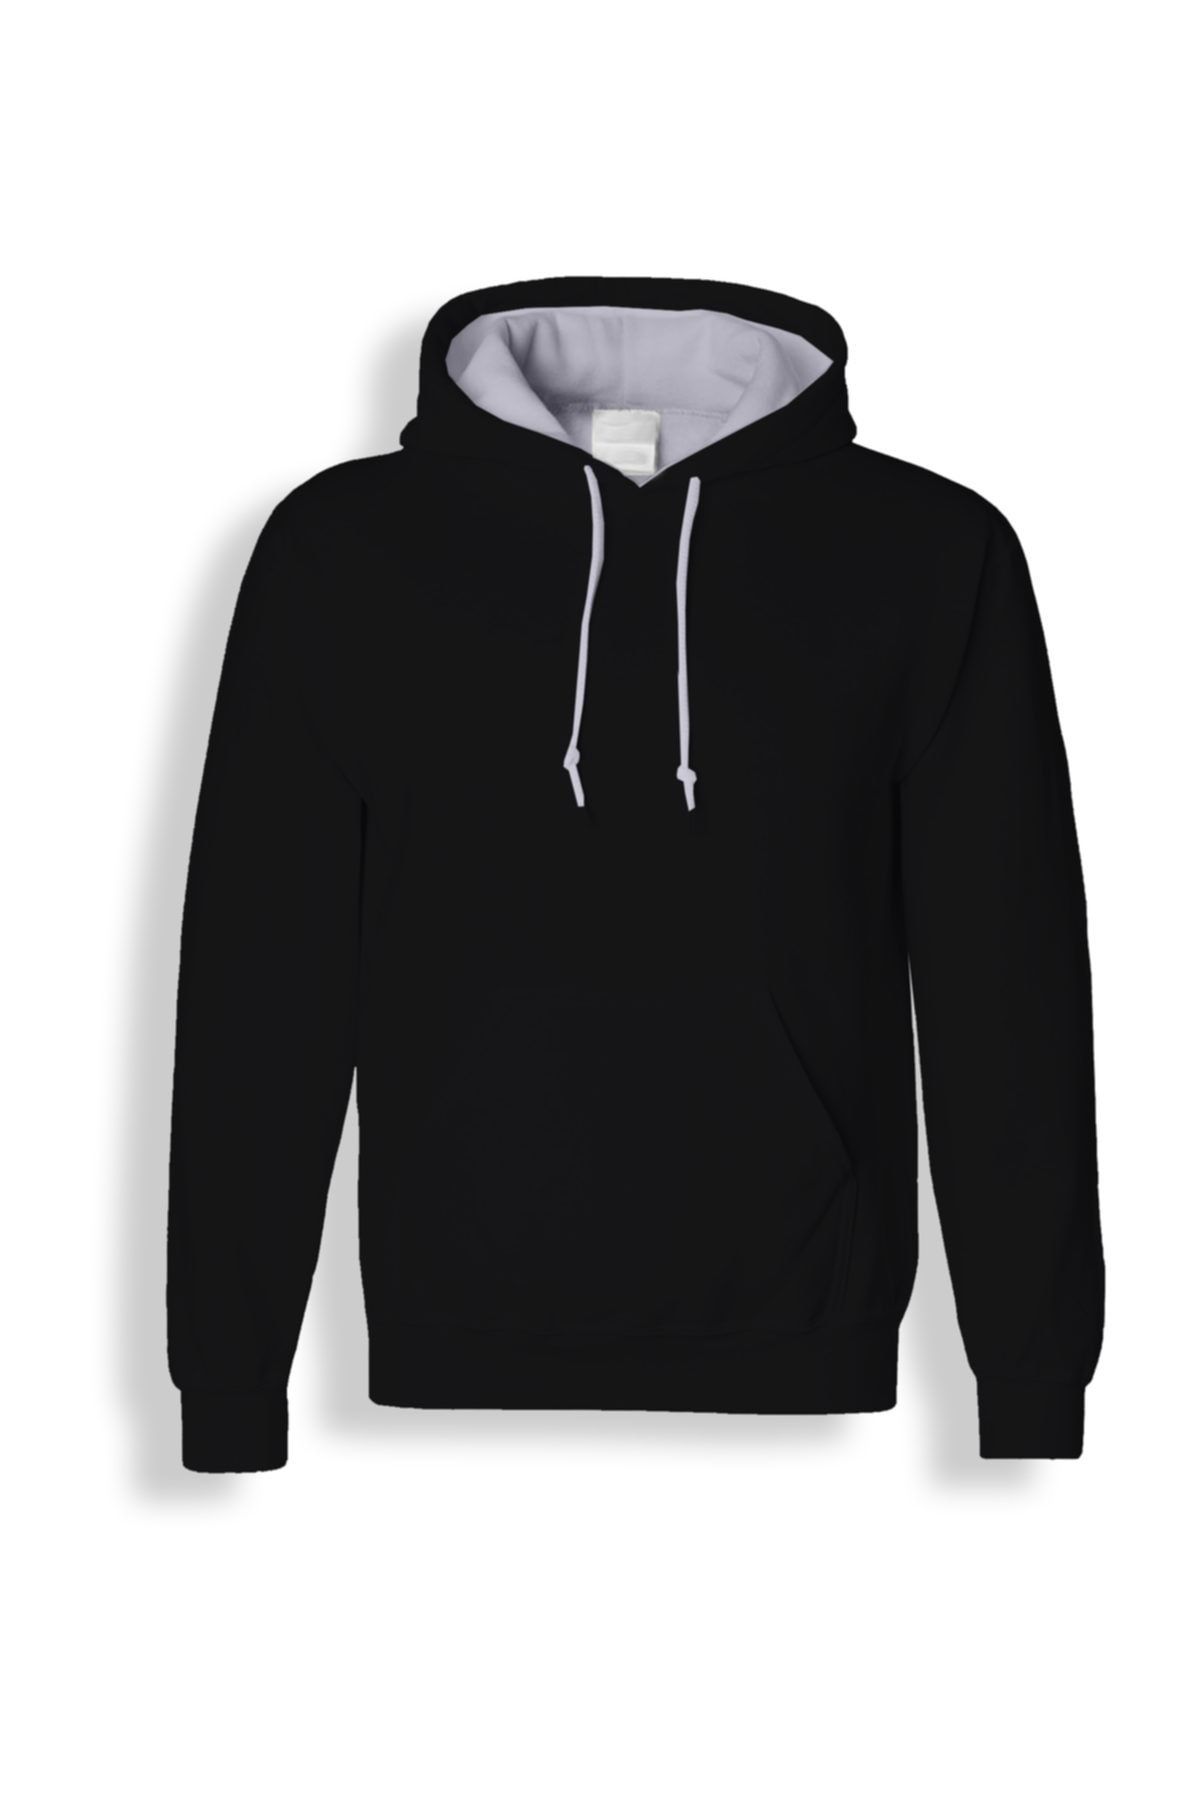 ACR Giyim Siyah Kapüşonlu Sweatshirt - Unisex Kalıp - Cepli Hoodie